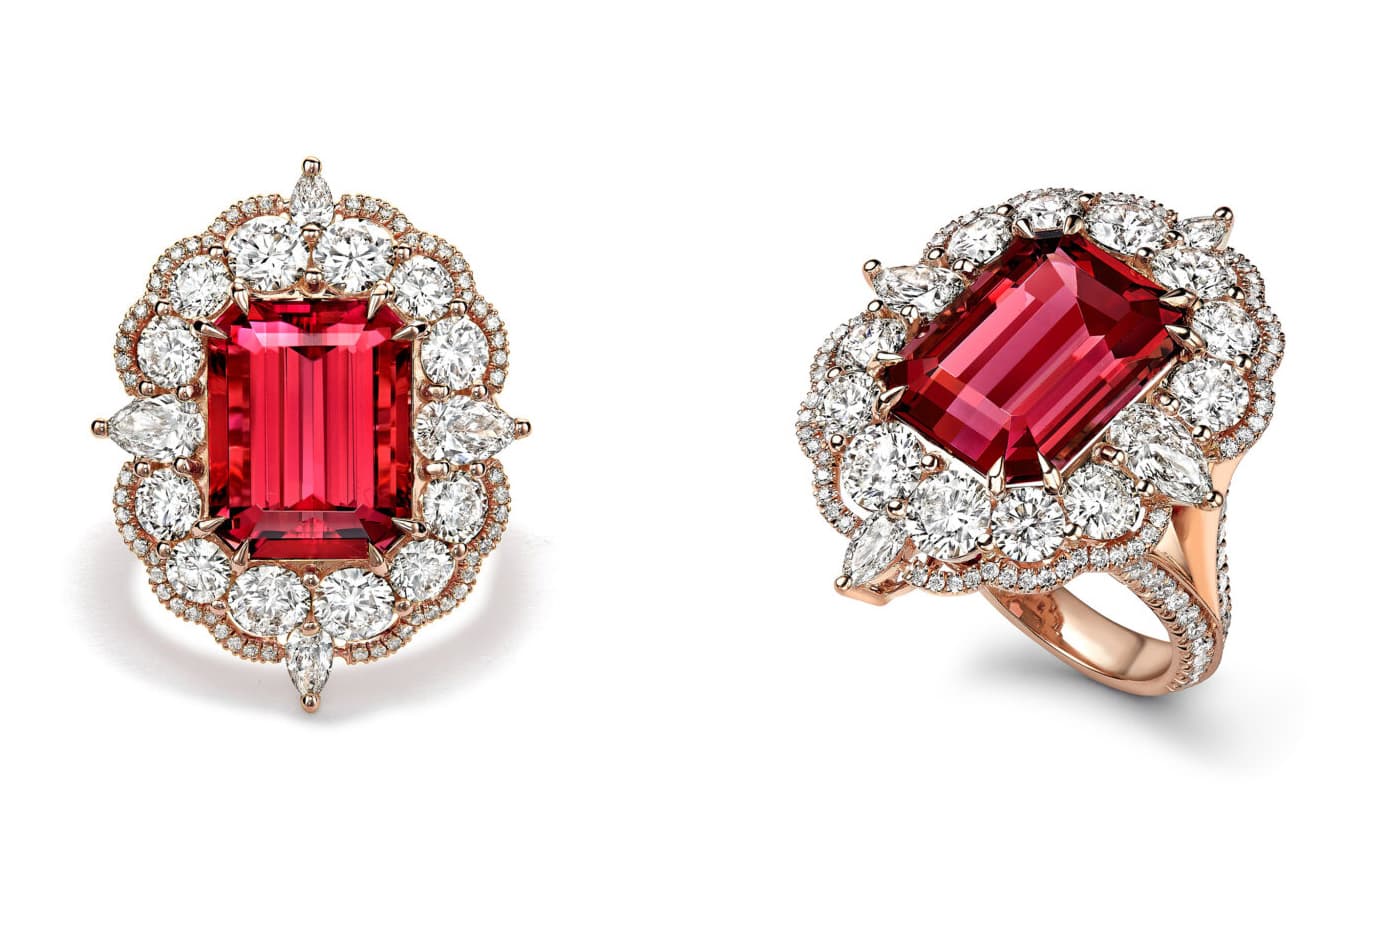 Atelier Pino Spitaleri Royal Lilypad ring set with a 15 carat deep pink natural tourmaline and diamonds in 18k rose gold 